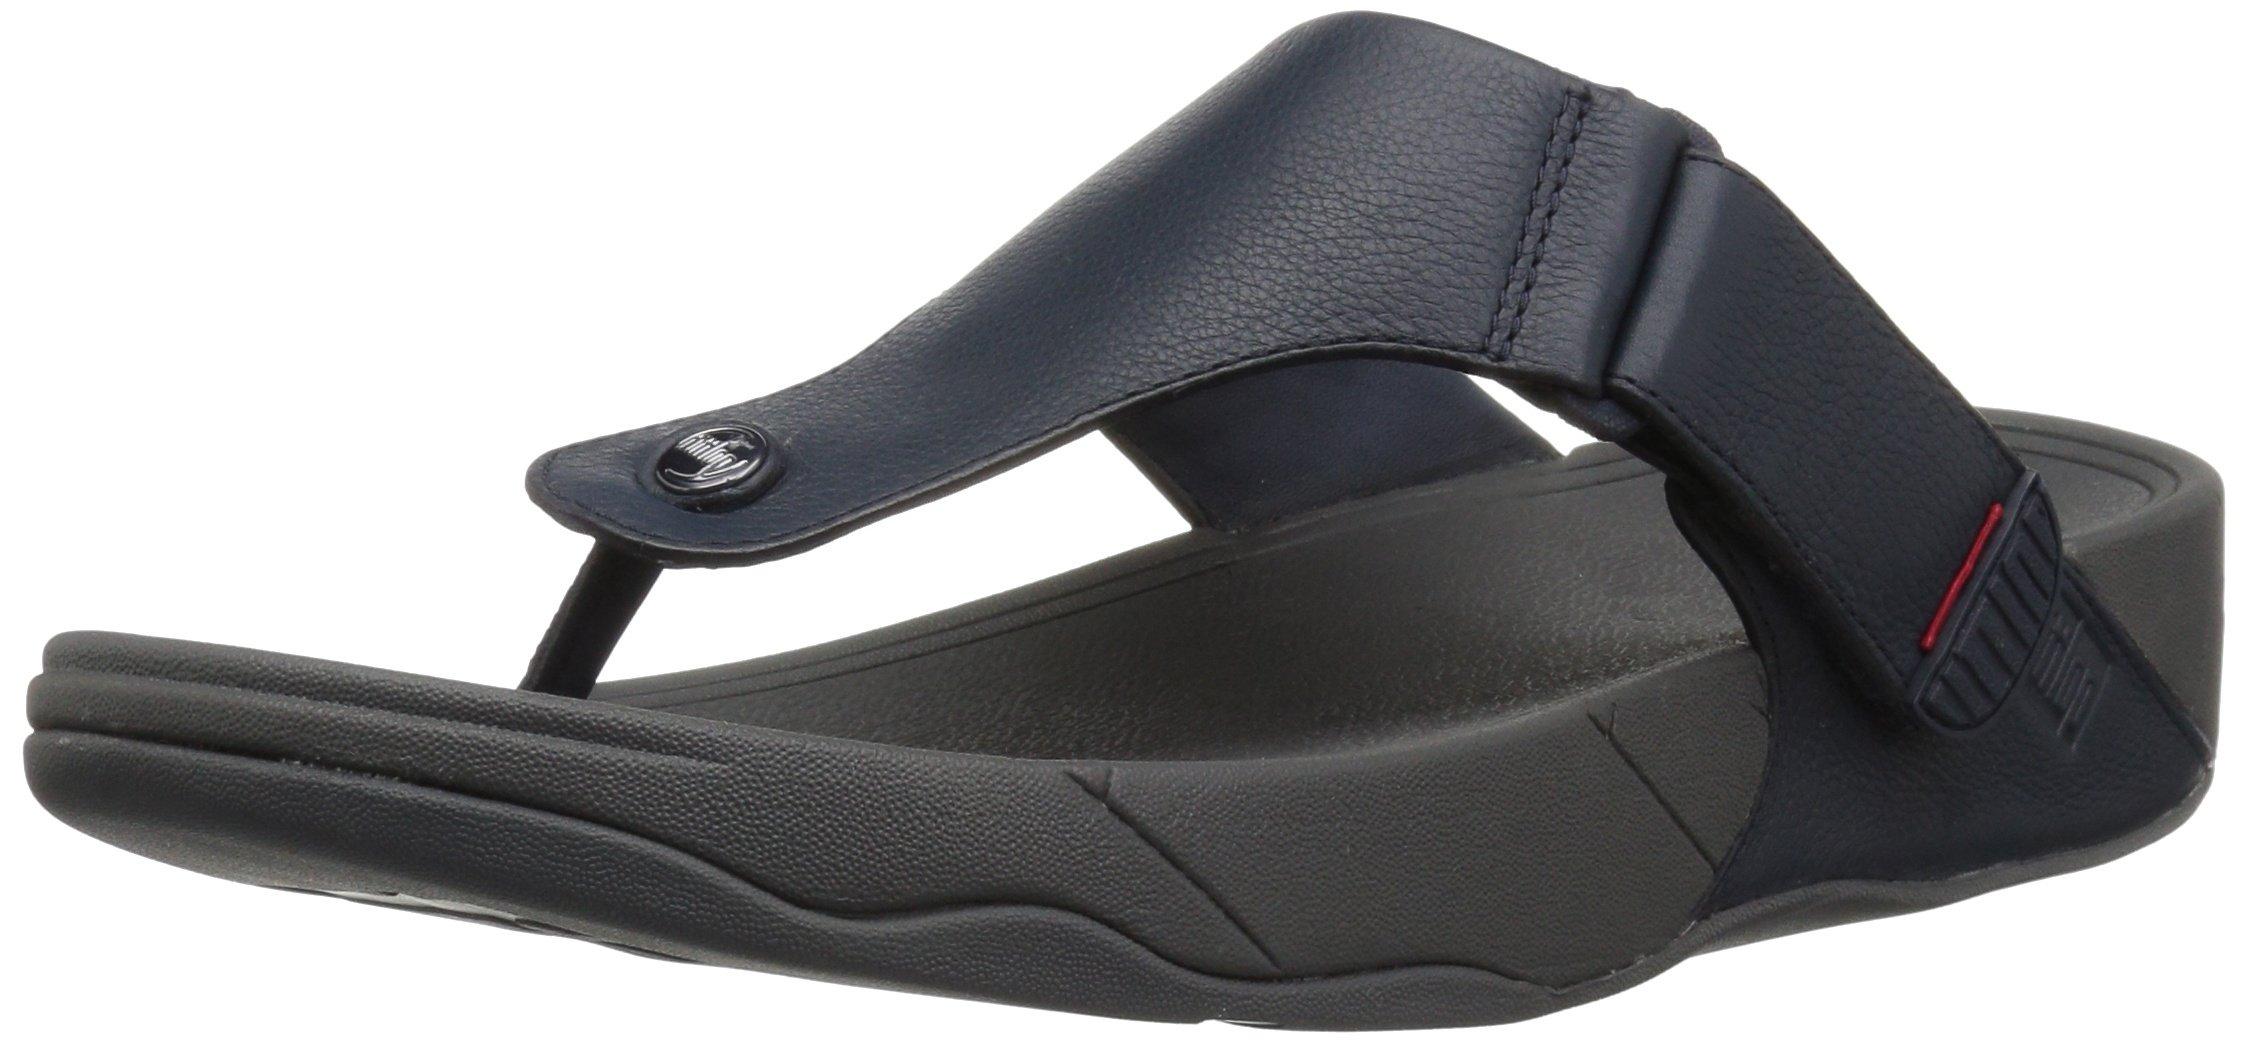 Fitflop Trakk Ii Leather Toe Post Flip Flop Sandals - Black for Men | Lyst